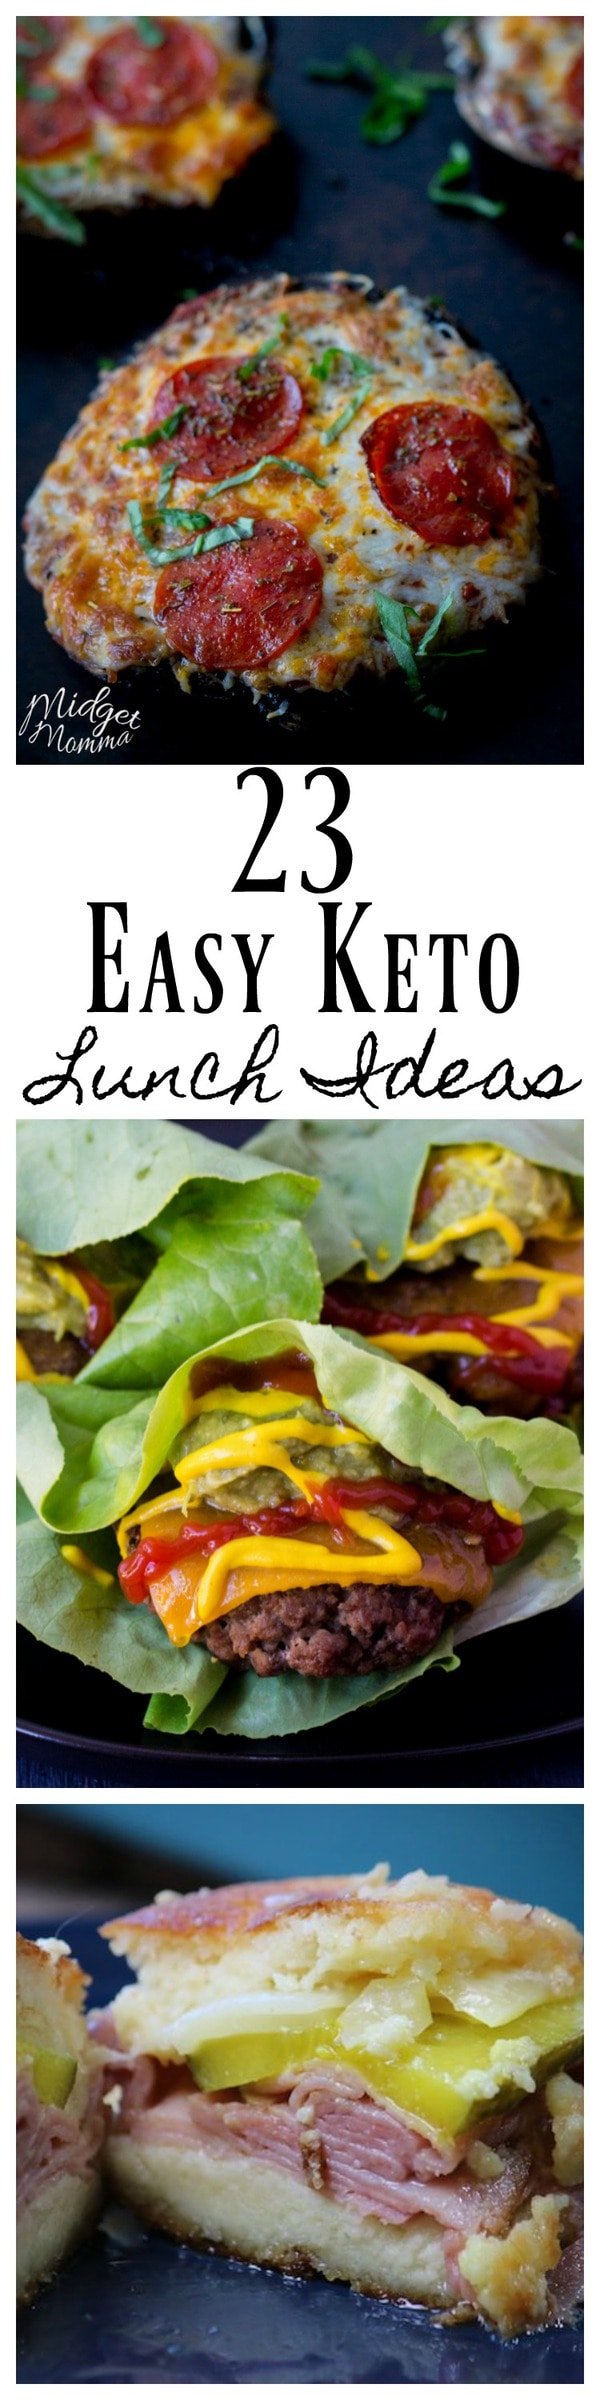 23 Easy Keto Lunch Ideas- Easy and super tasty lunch ideas that are keto friendly. #EasyKeto #keto #KetoLunch #KetoRecipes